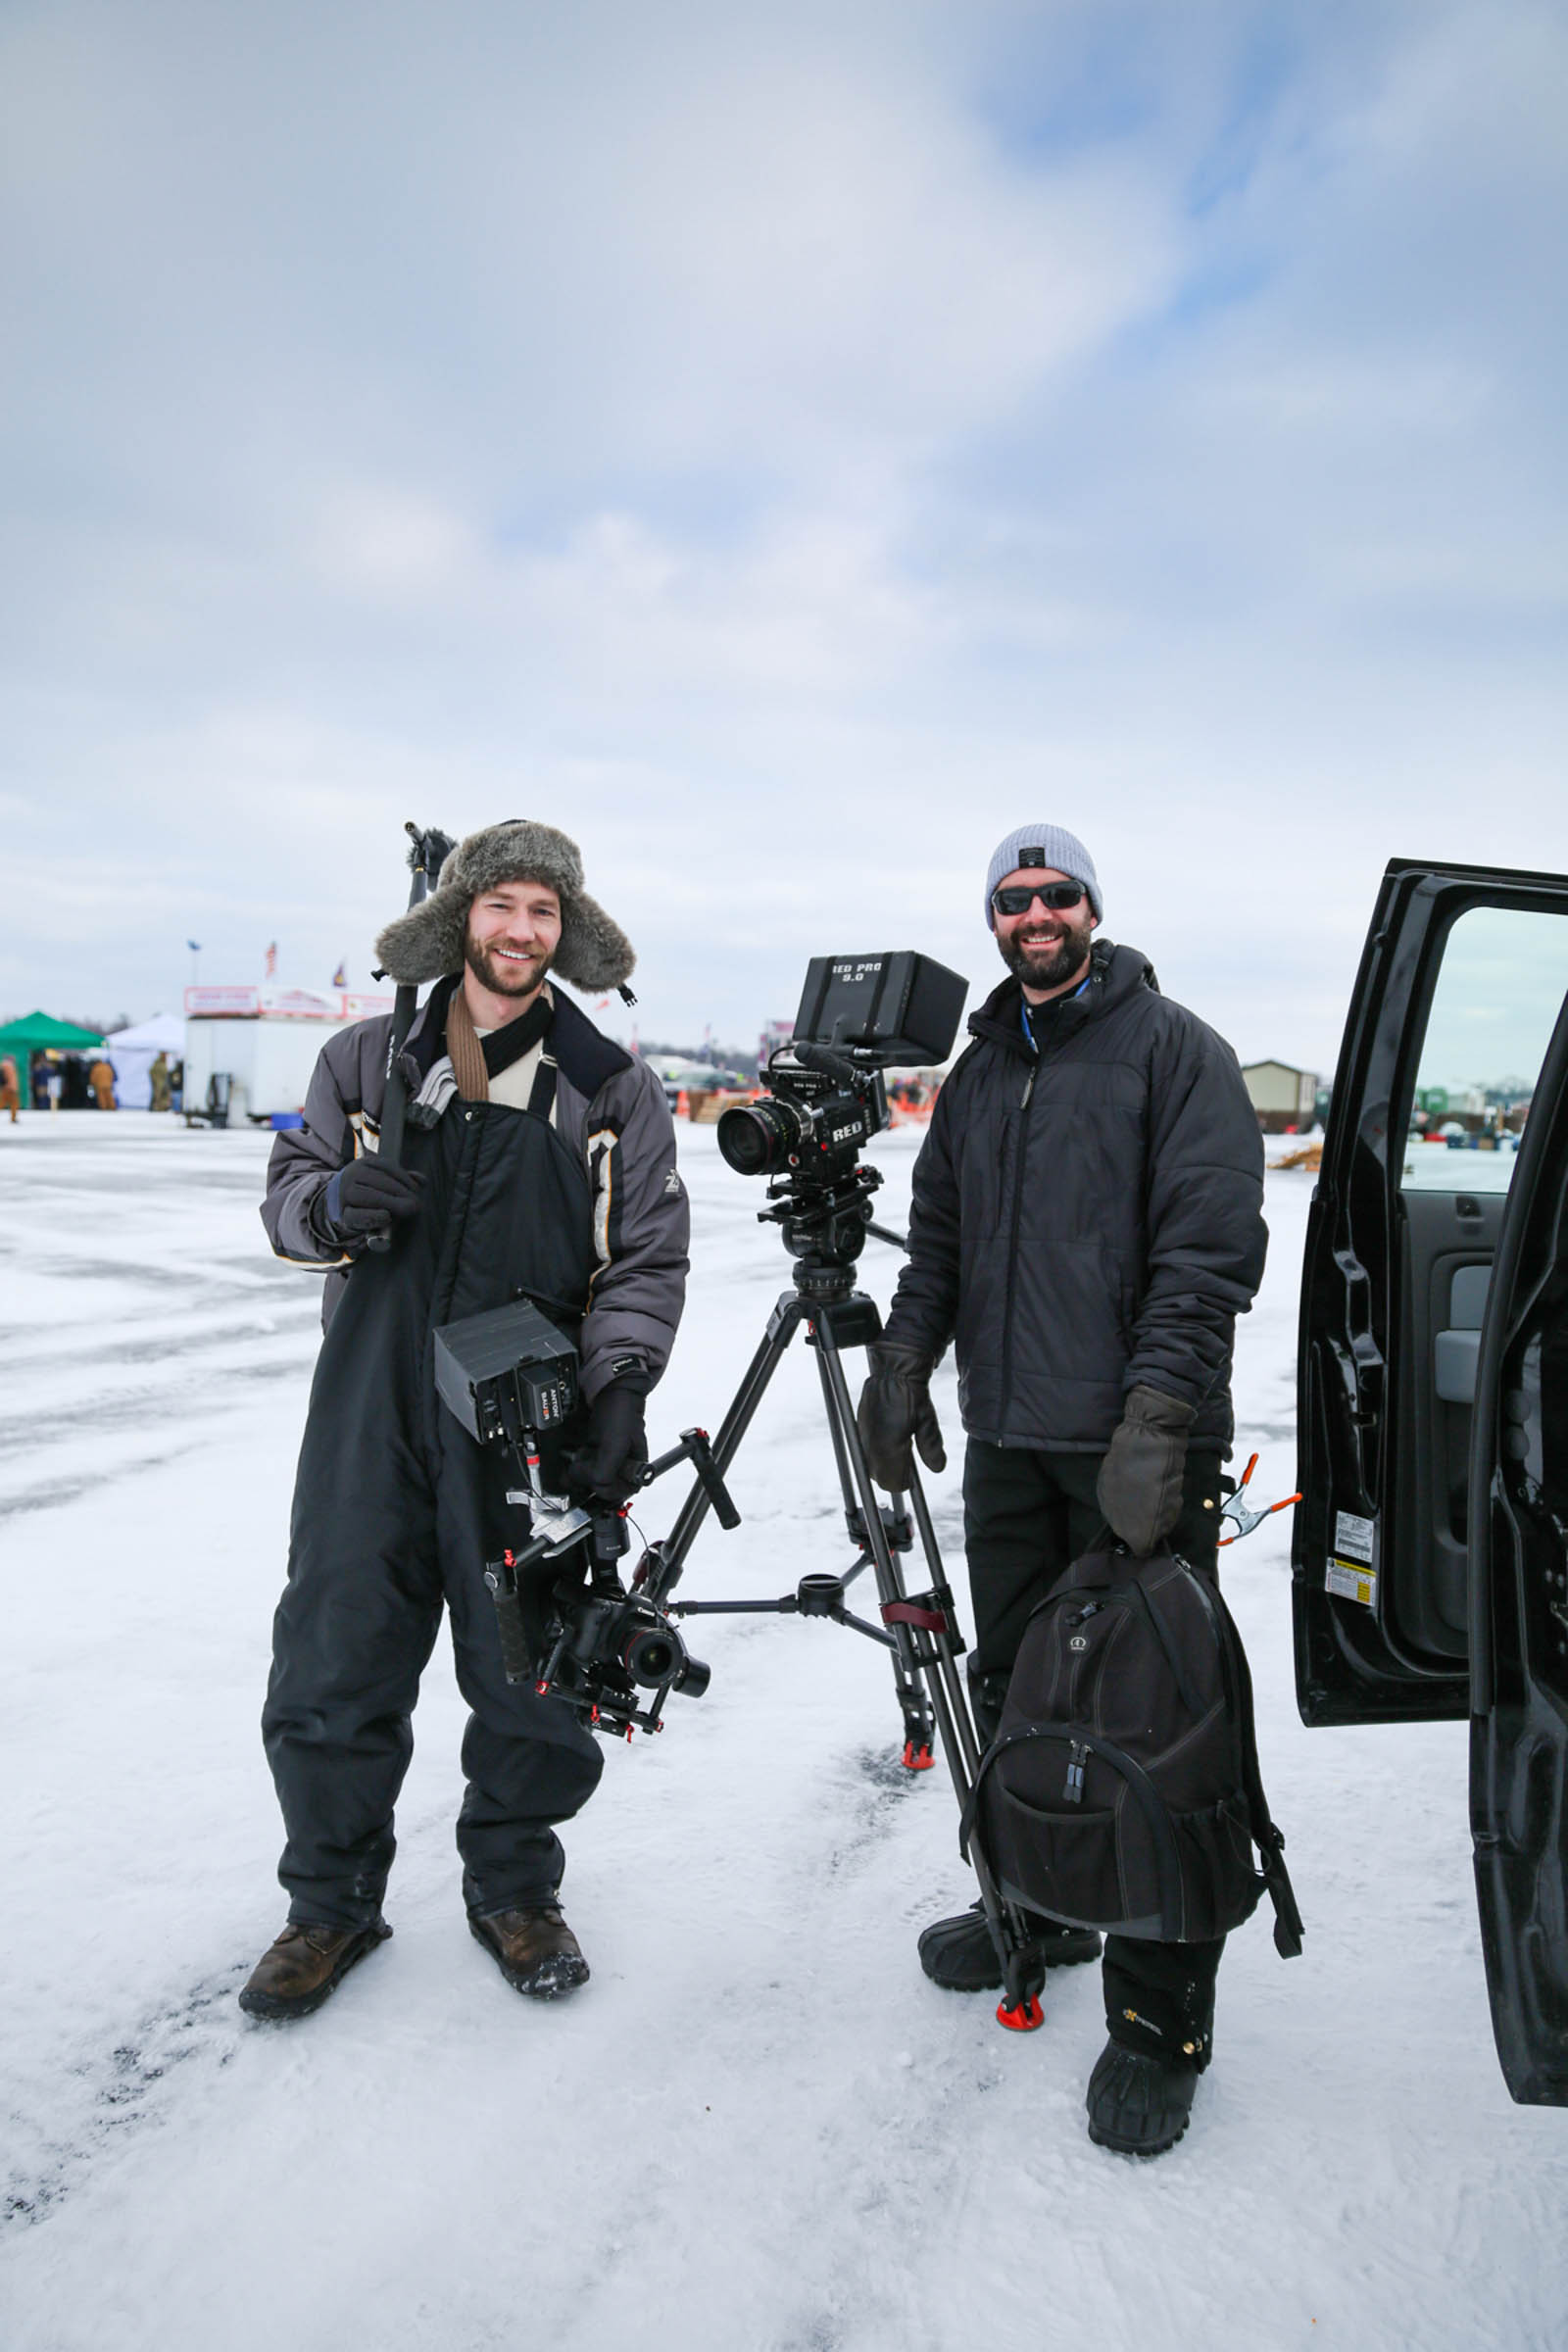 videographers filming and adding to portfolio